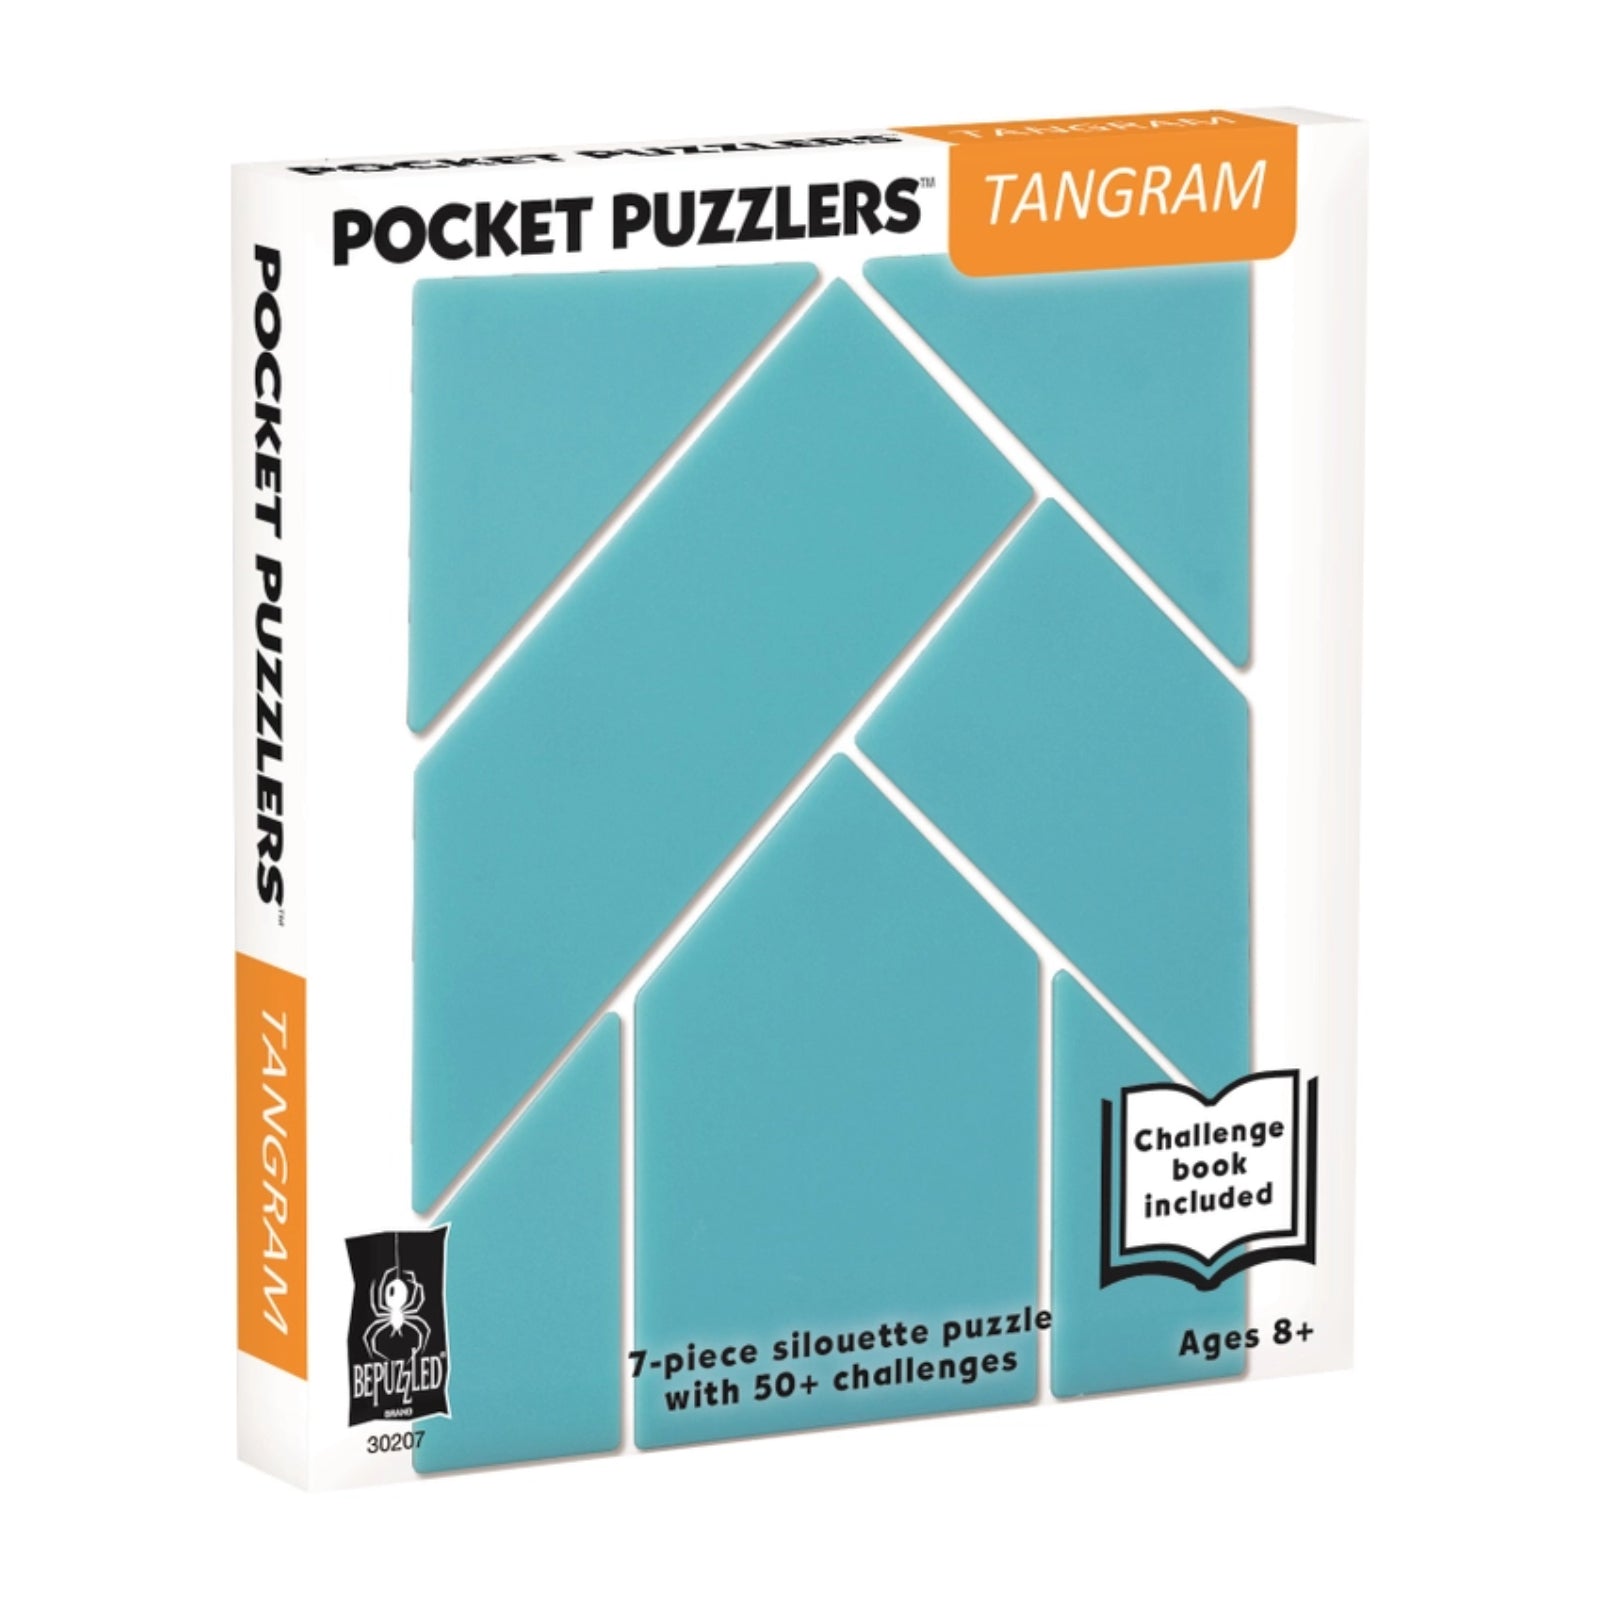 Pocket Puzzlers - Tangram - Bepuzzled